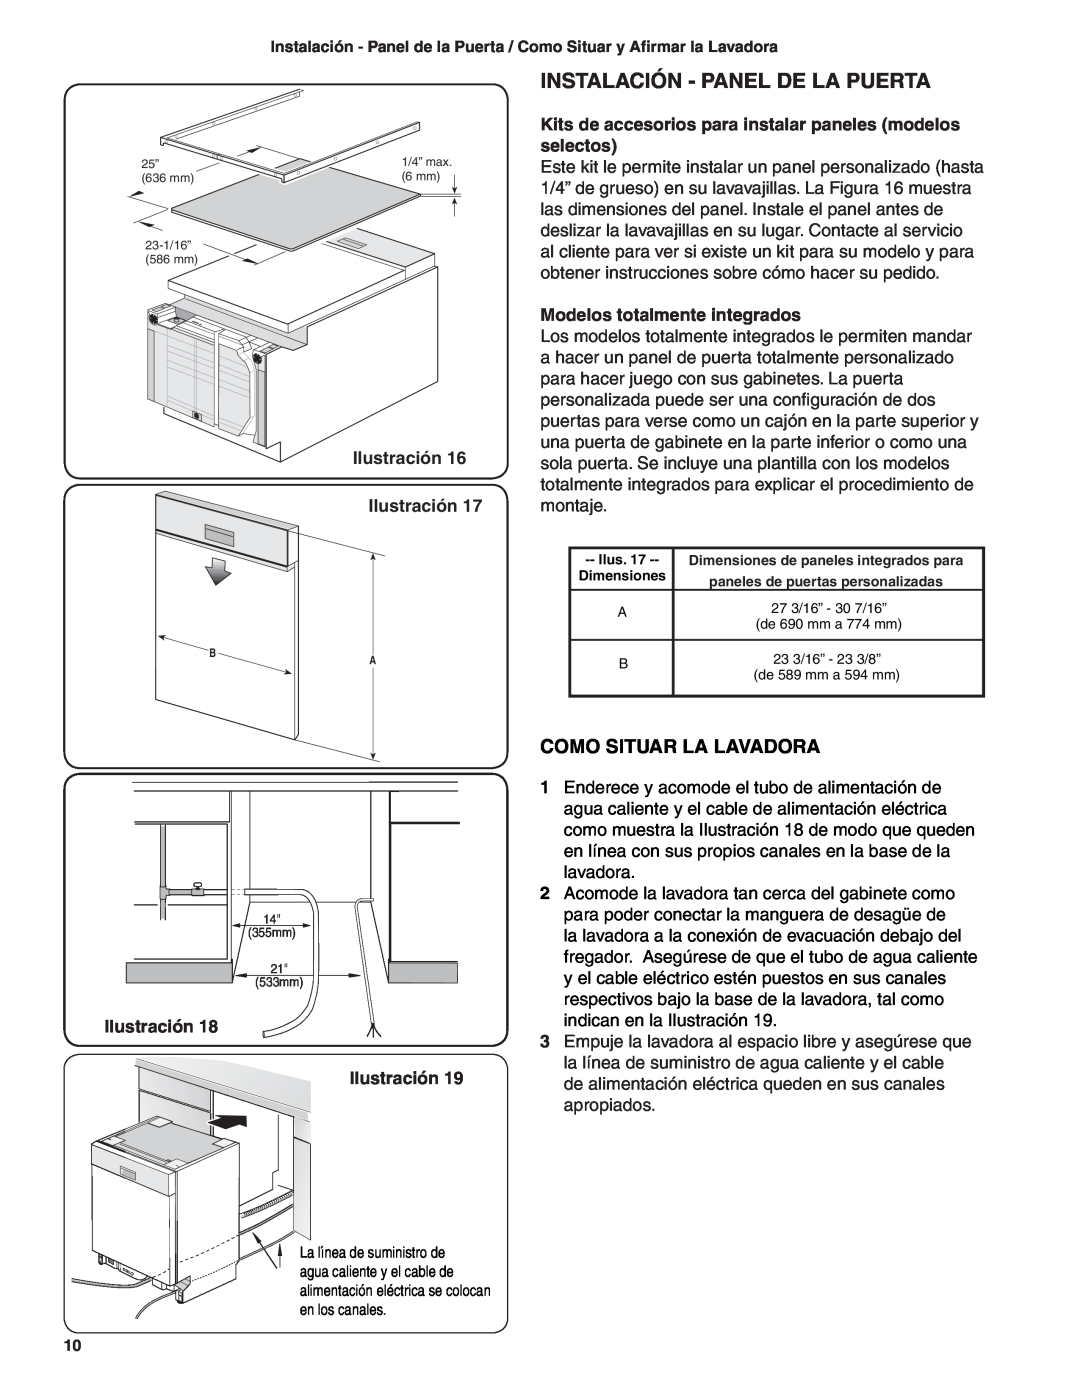 Bosch Appliances BSH Dishwasher important safety instructions Instalación - Panel De La Puerta, Como Situar La Lavadora 